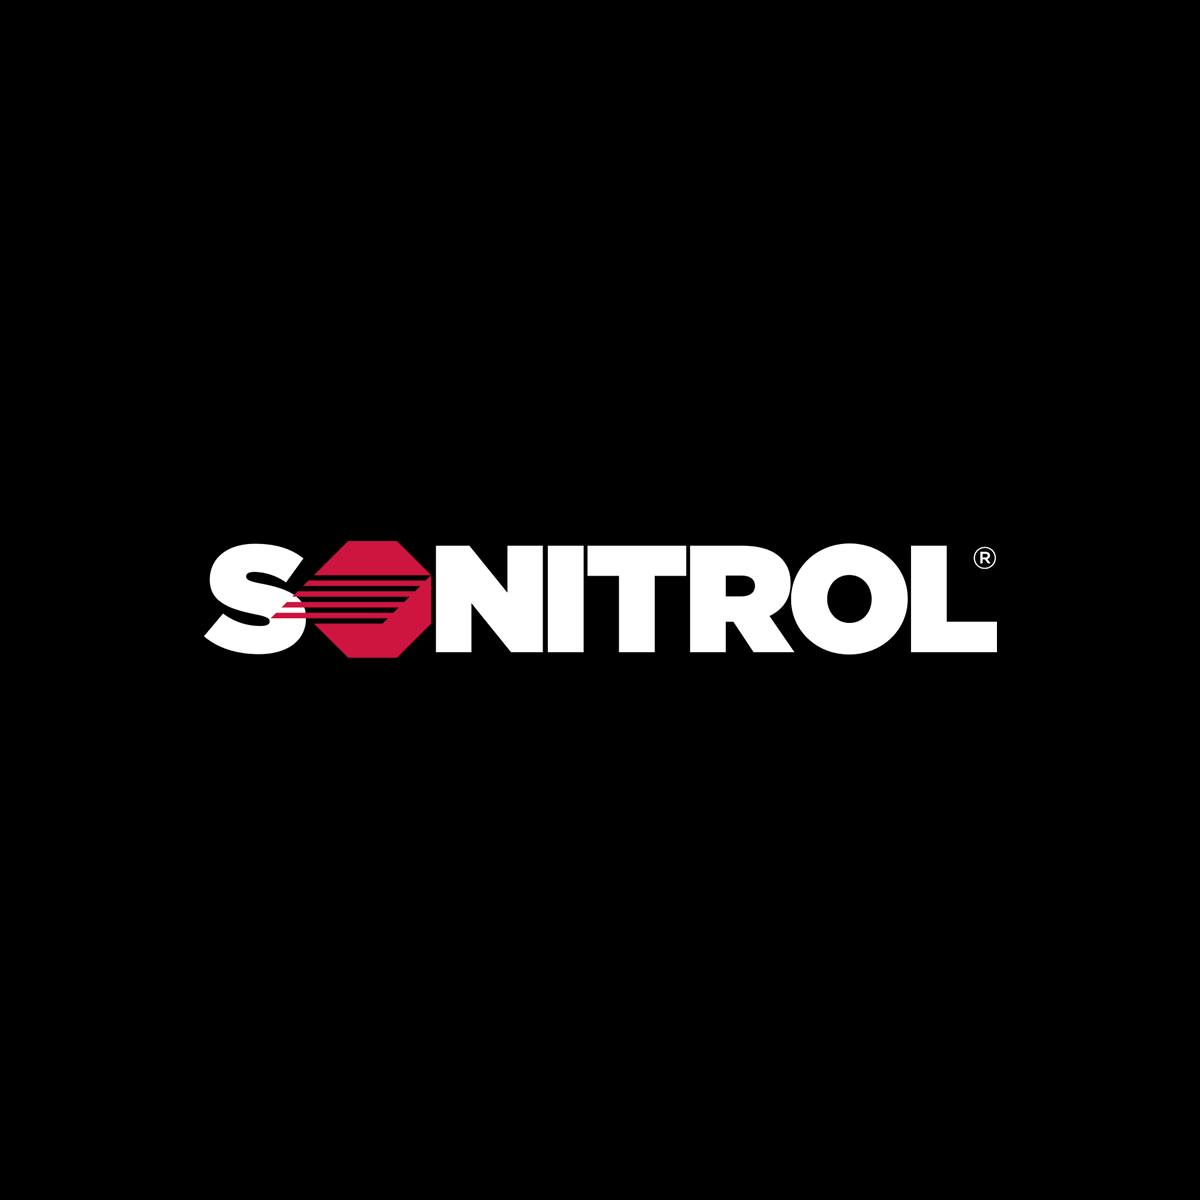 Sonitrol